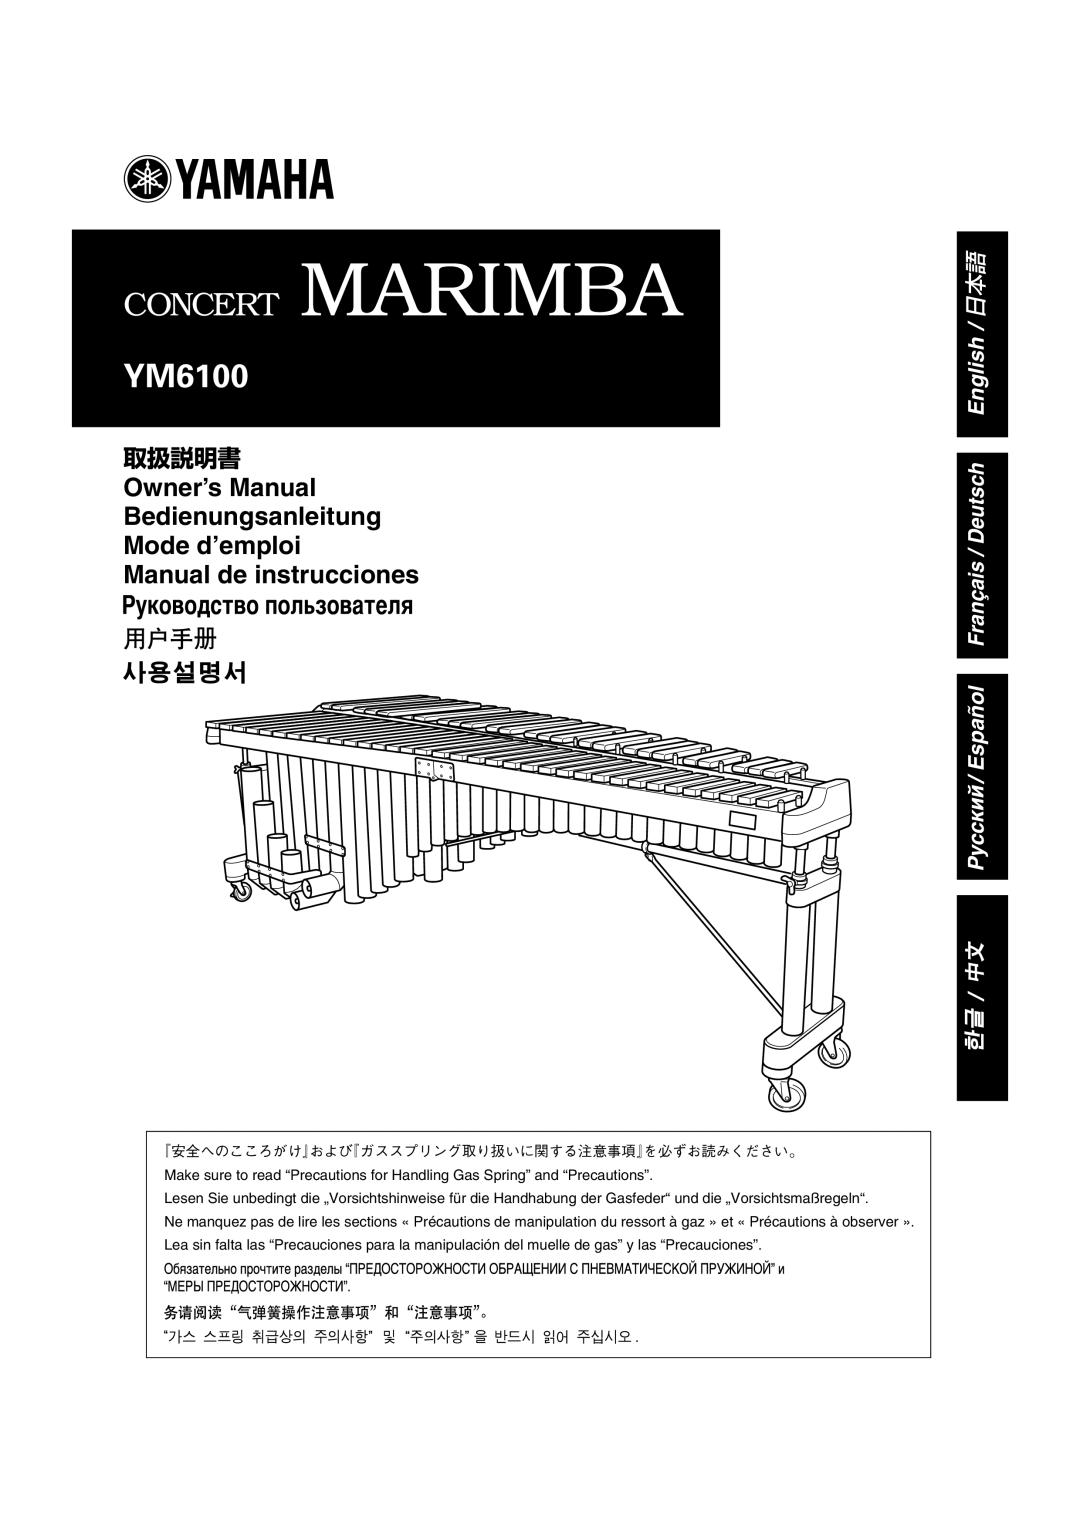 Yamaha YM6100 owner manual Owner’s Manual Bedienungsanleitung Mode d’emploi, Manual de instrucciones, Concert Marimba 